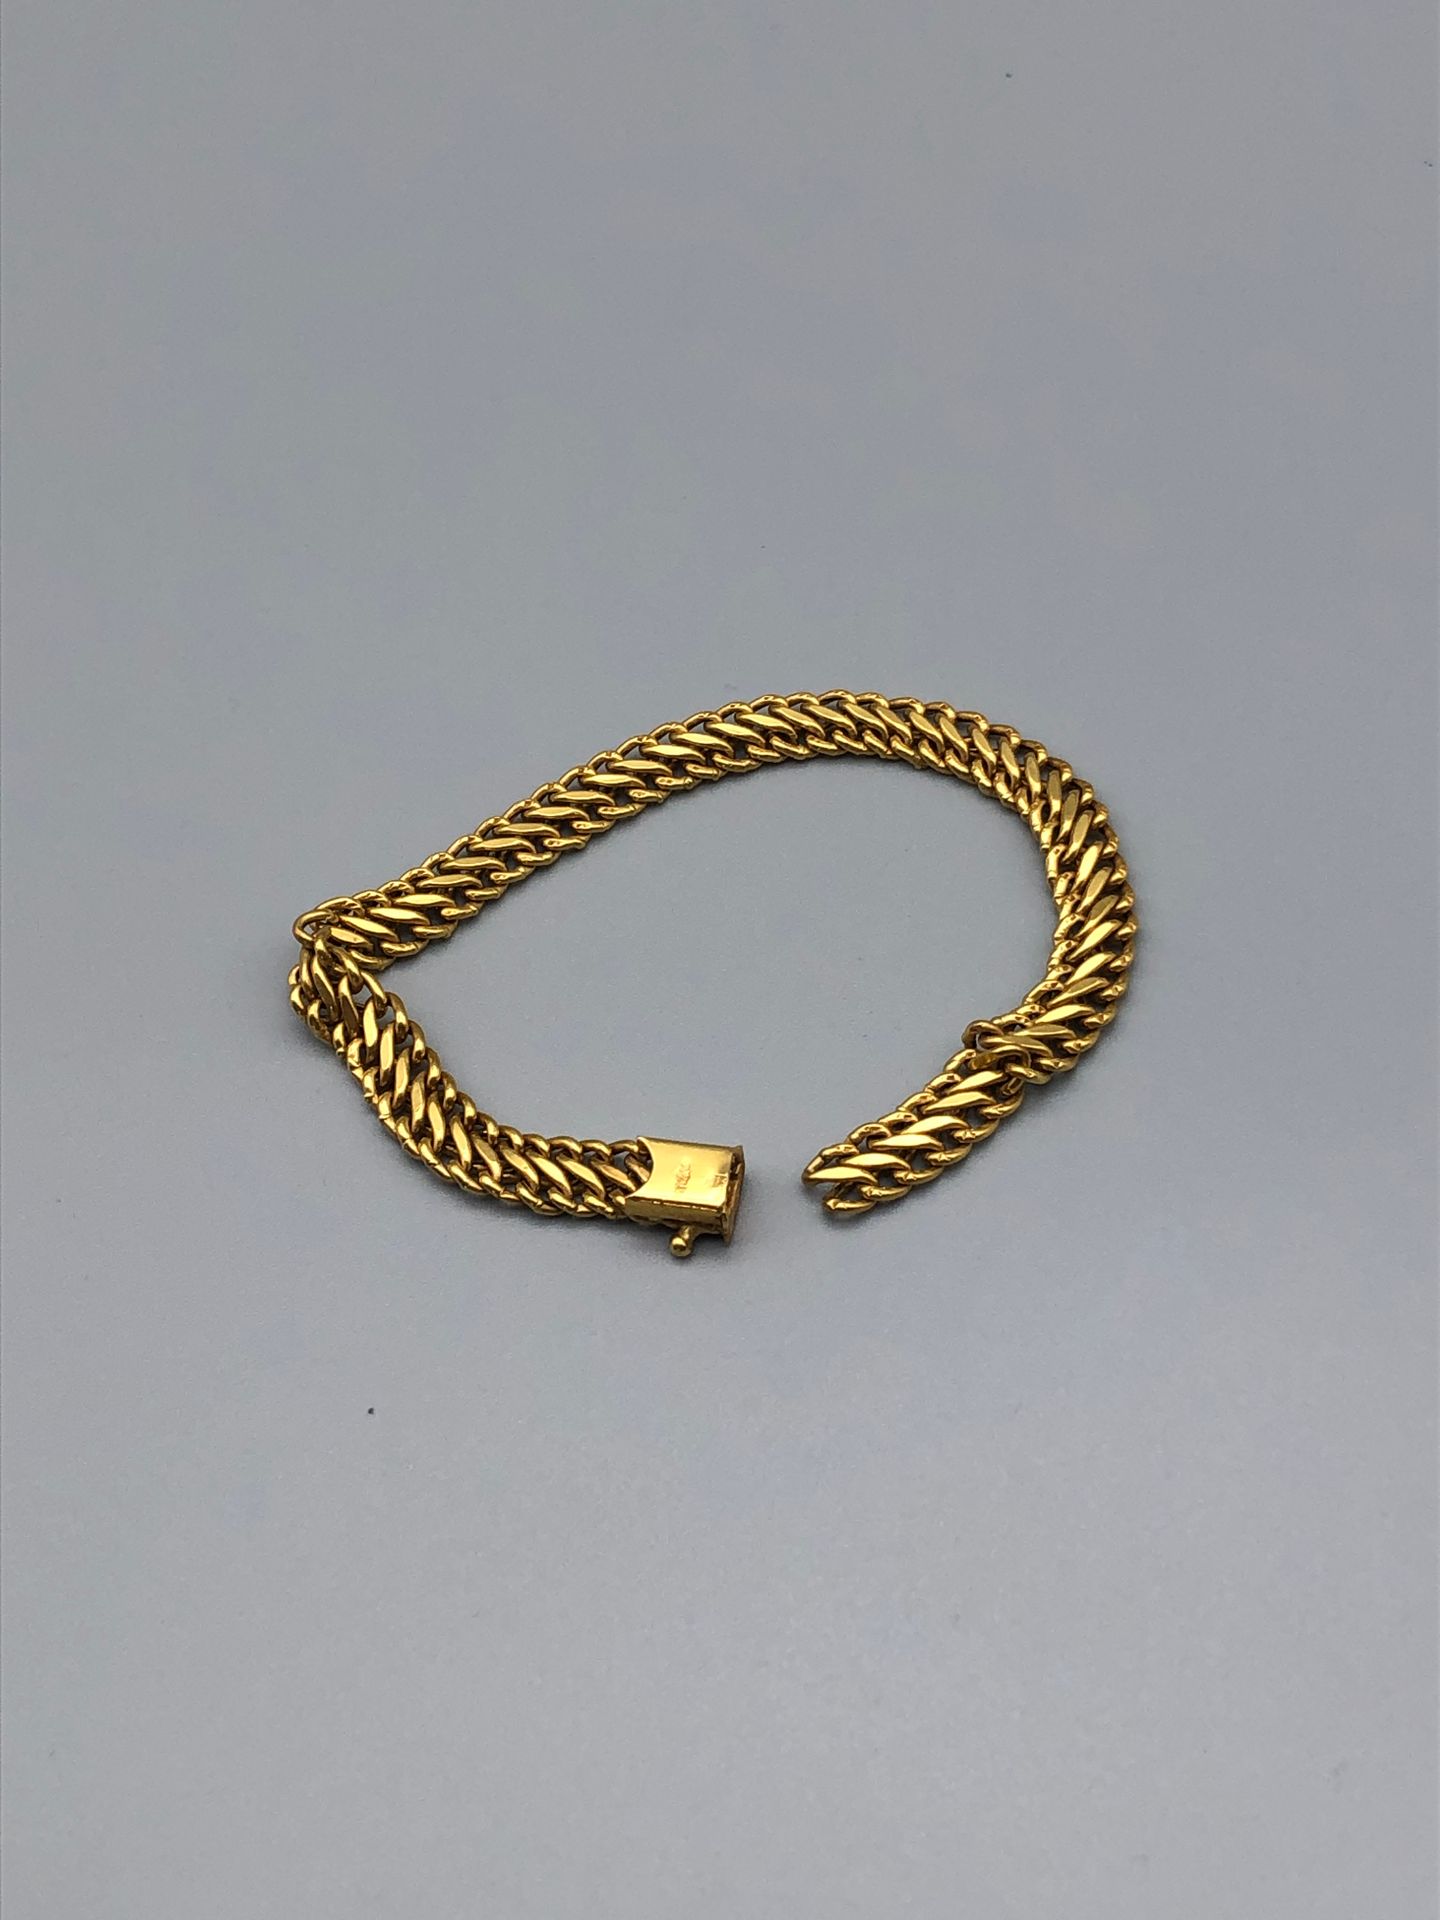 Null Bracelet in yellow gold 750 thousandths broken American mesh 6.7 g.

*****L&hellip;